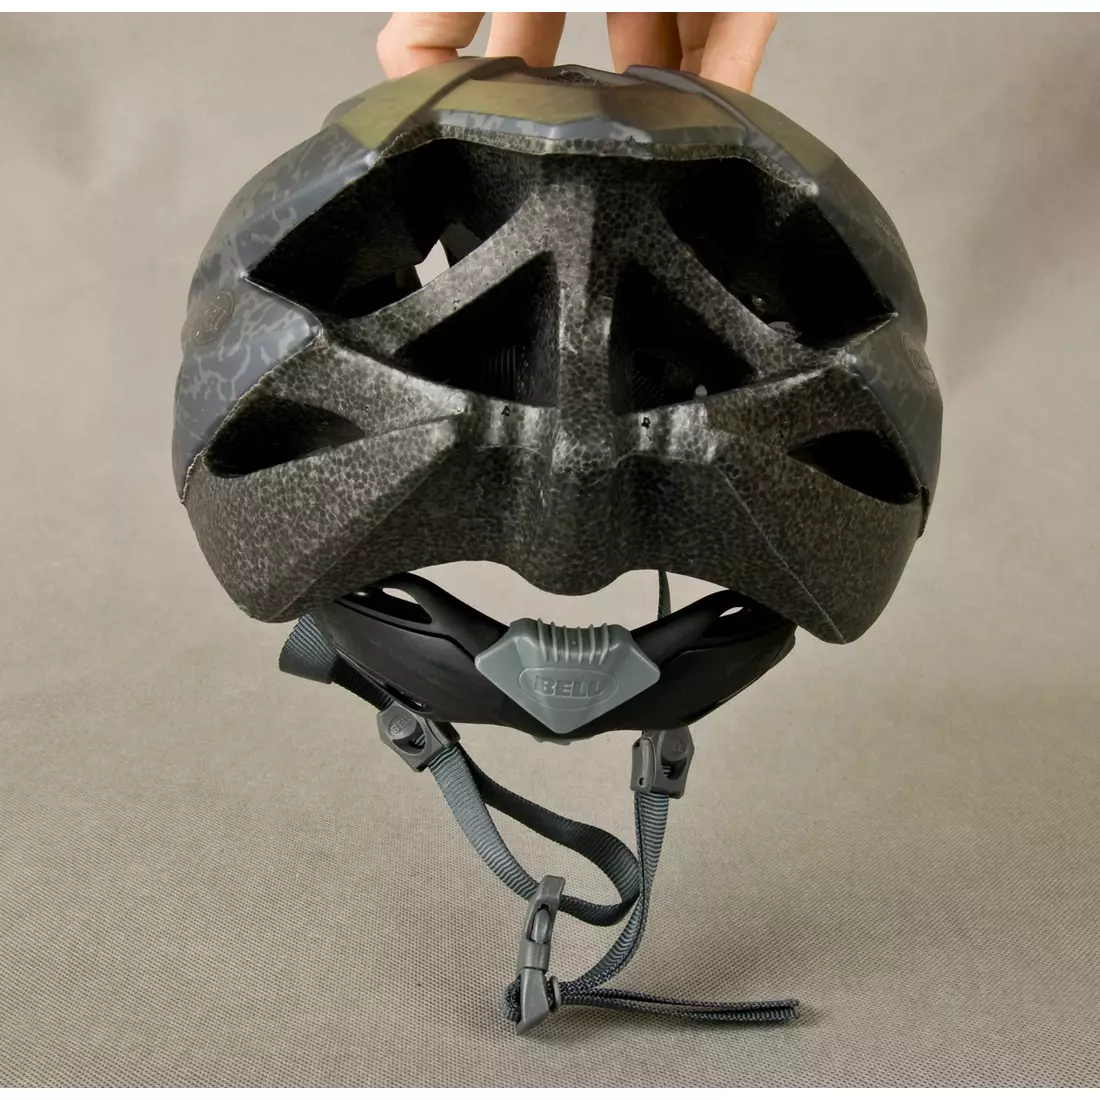 BELL bicycle helmet SLANT titanium matt